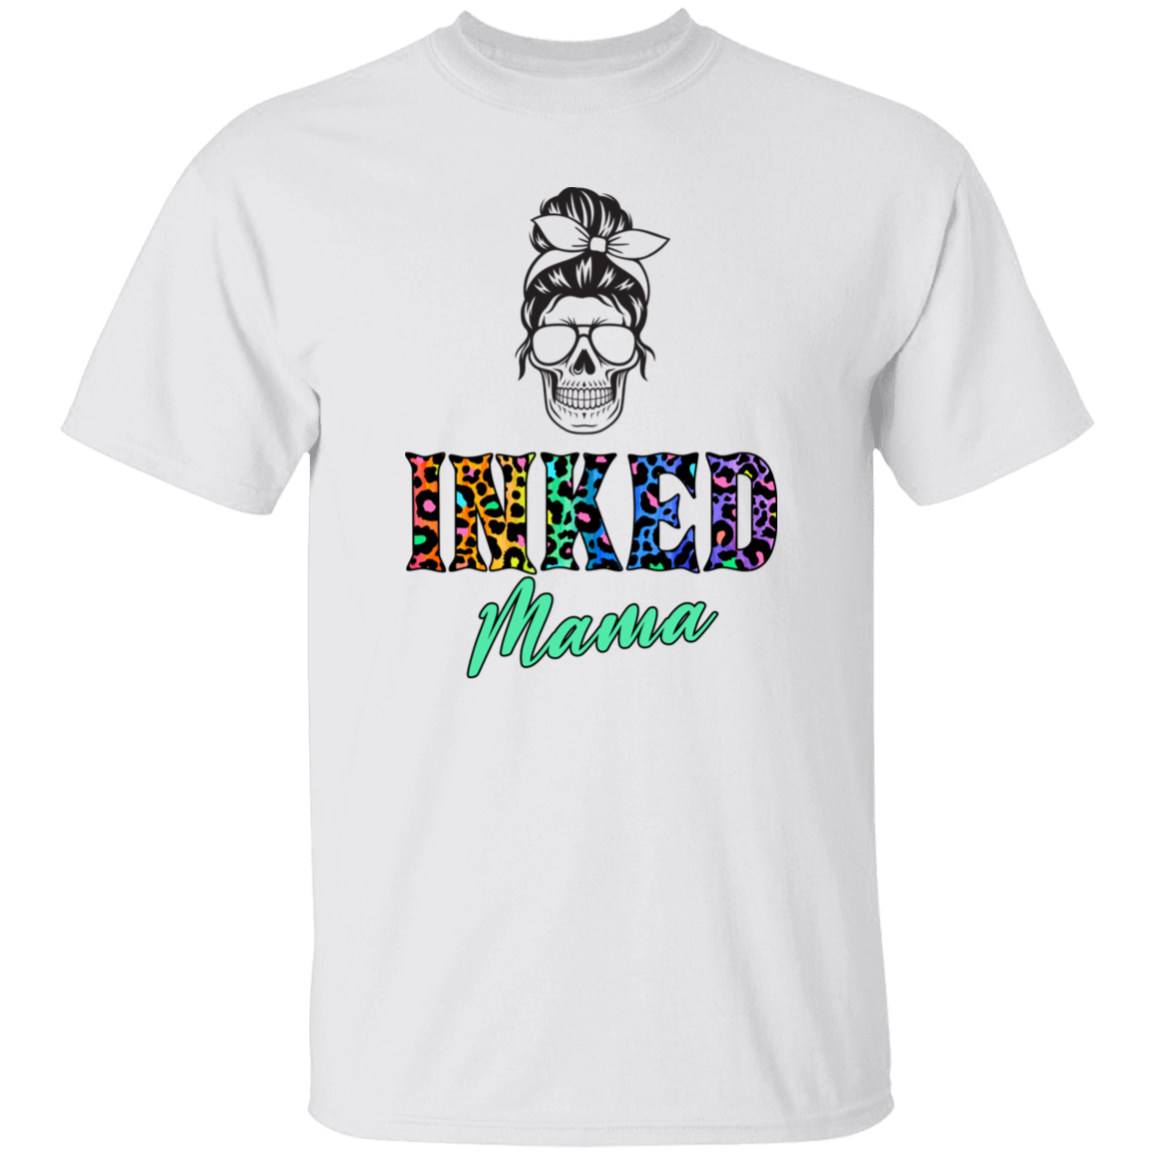 Inked Mama  T-Shirt